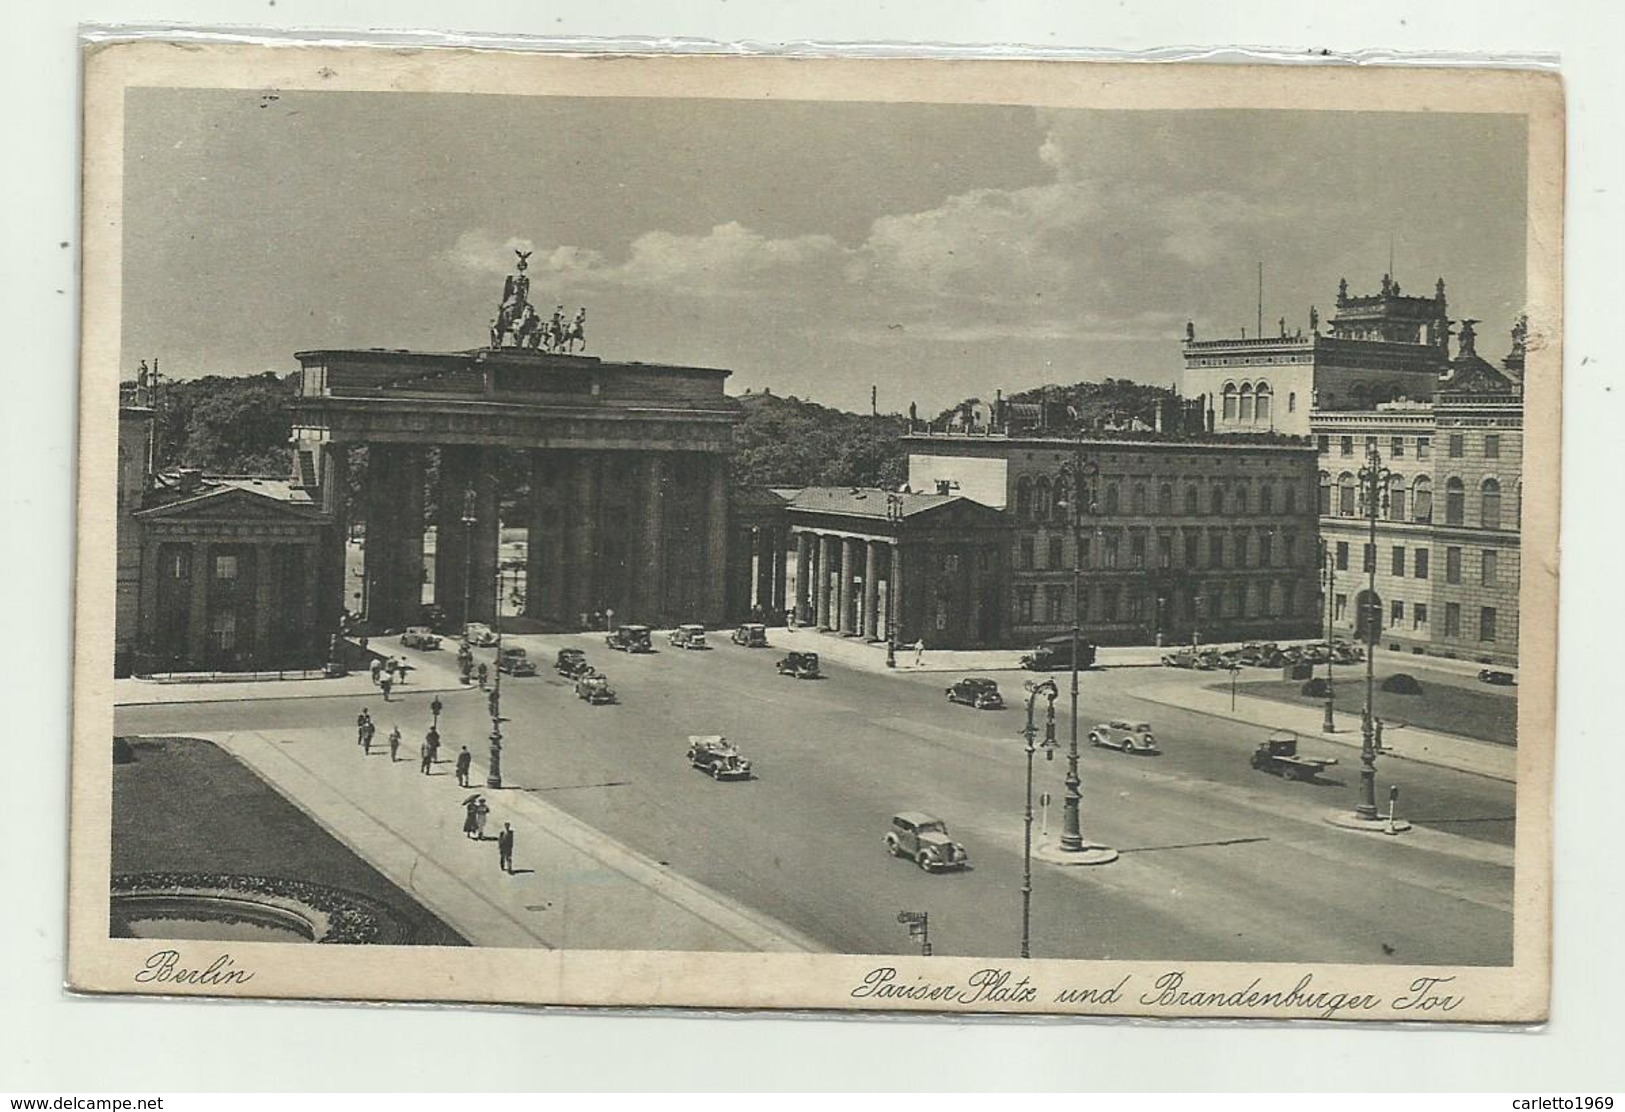 BERLIN - PARISER PLATZ UND BRANDENBURGO TOR 1939 - VIAGGIATA    FP - Porte De Brandebourg